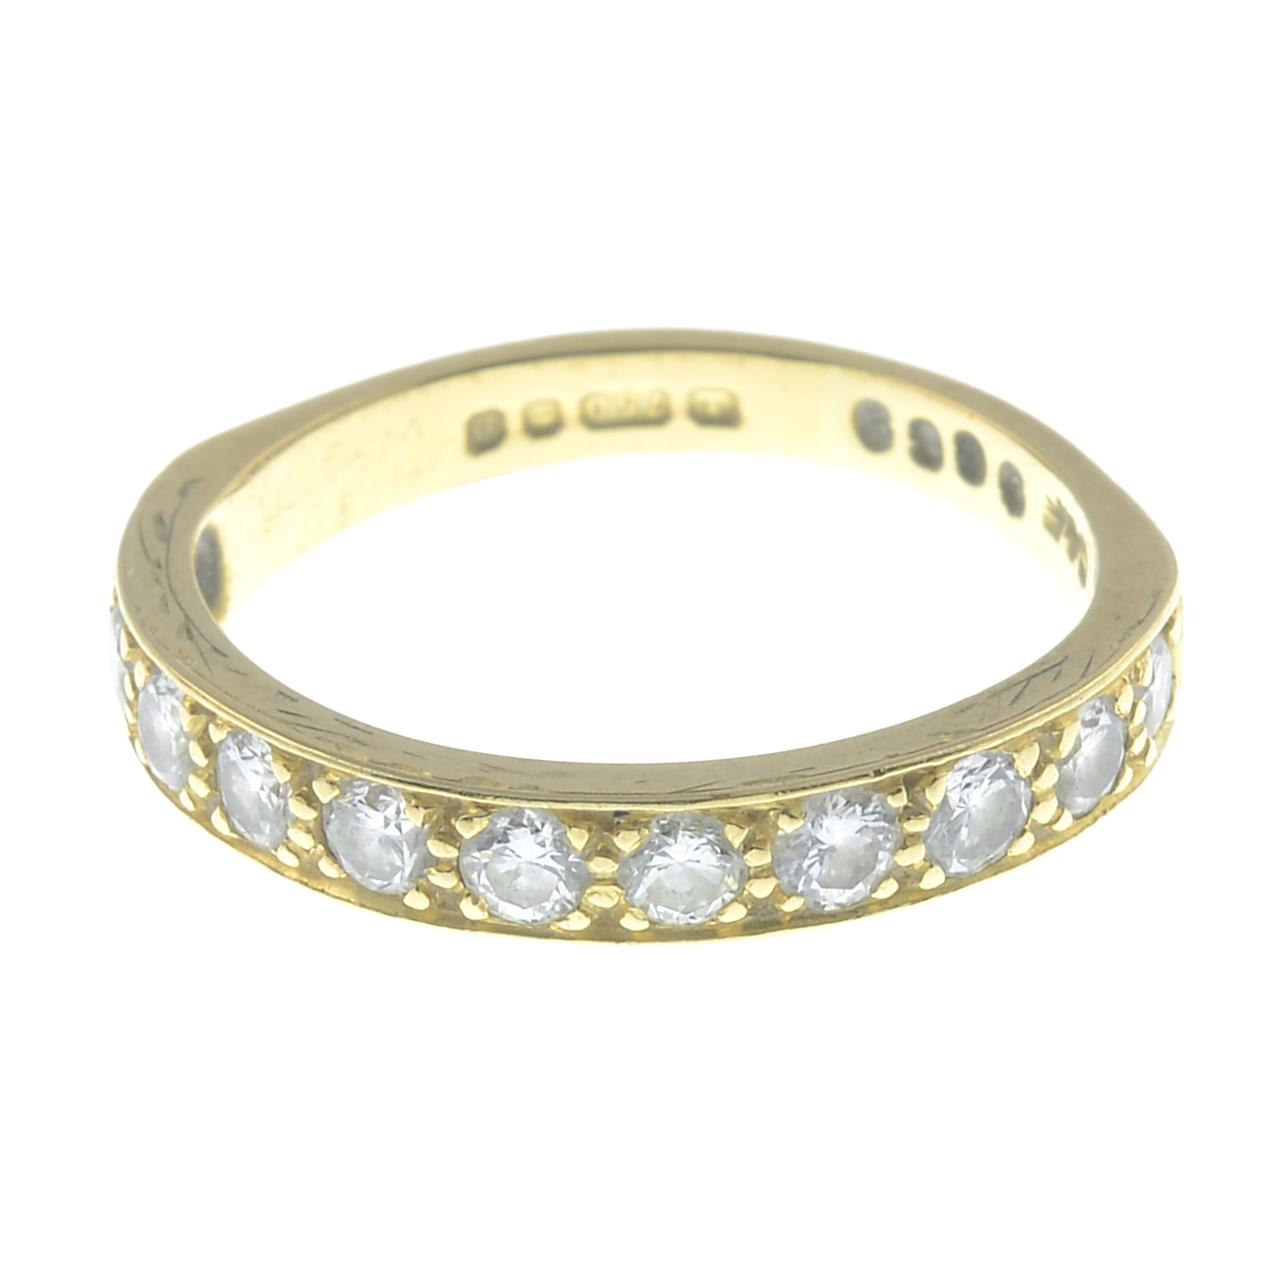 A 18ct gold diamond set half hoop eternity ring.Estimated total diamond weight 0.66ctStamped 750.